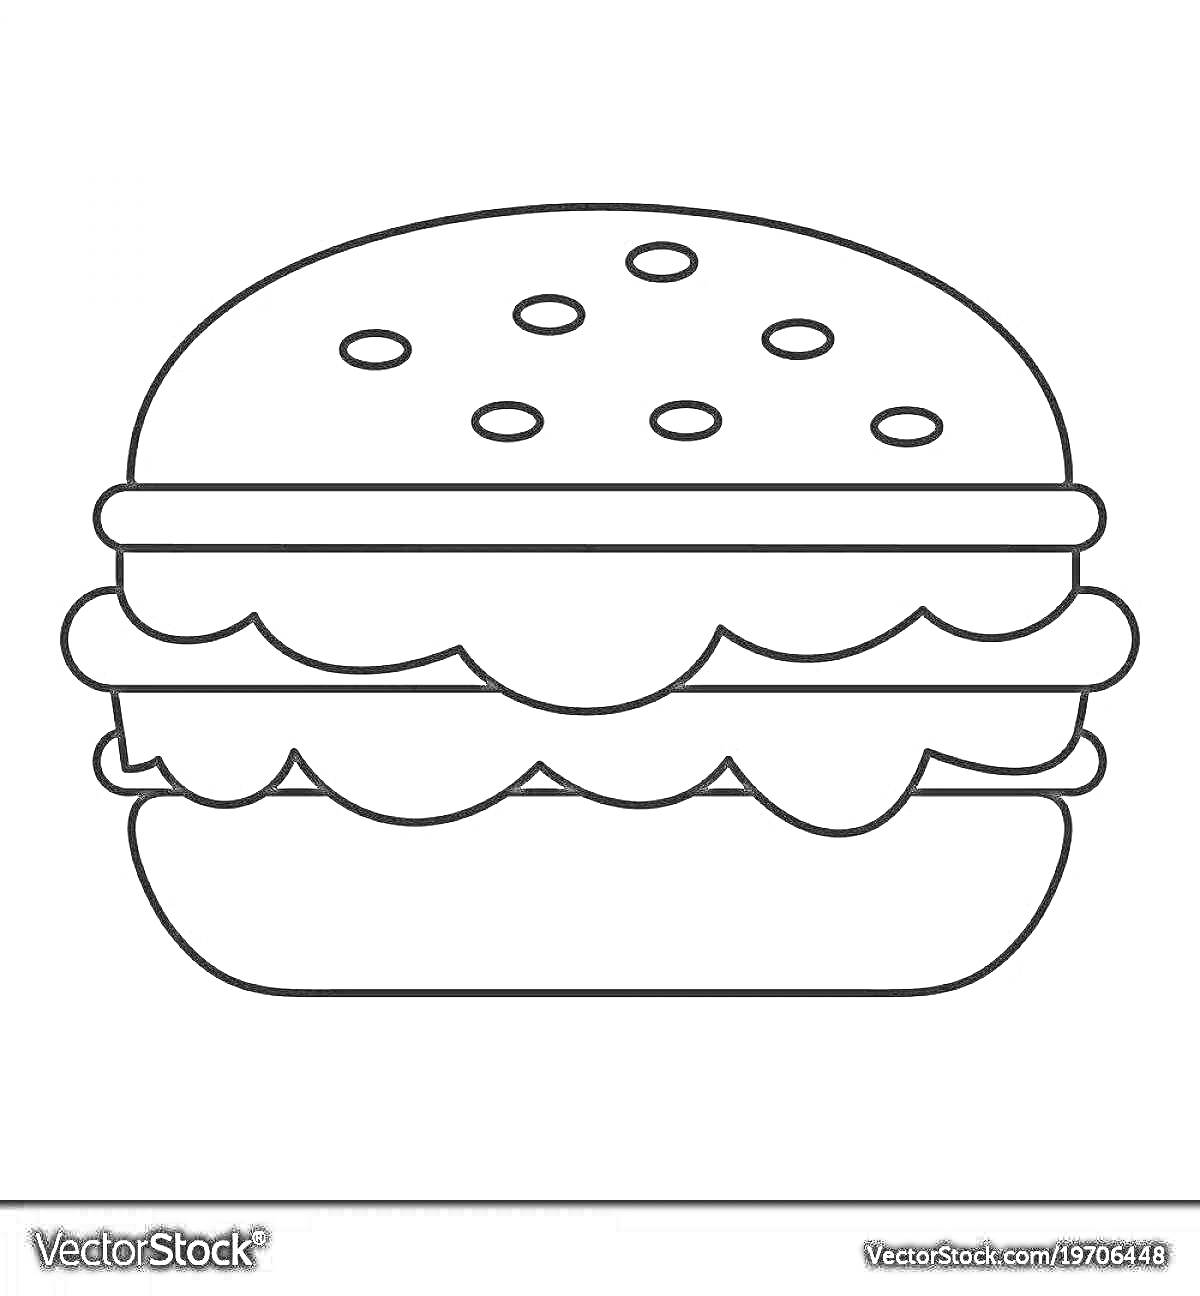 На раскраске изображено: Бутерброд, Булочка, Салат, Соус, Еда